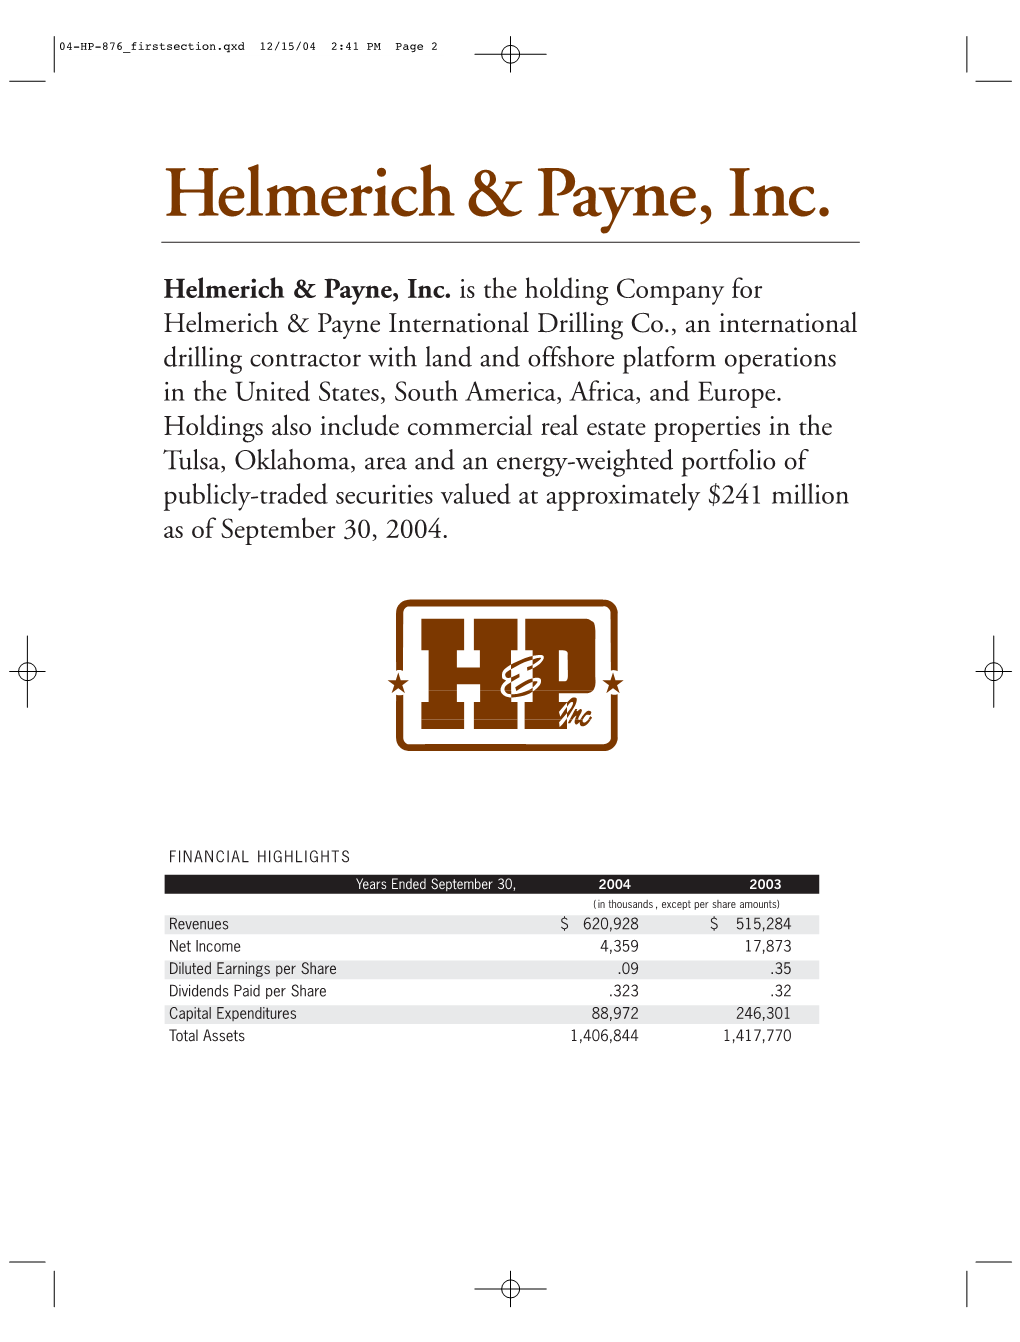 Helmerich & Payne, Inc